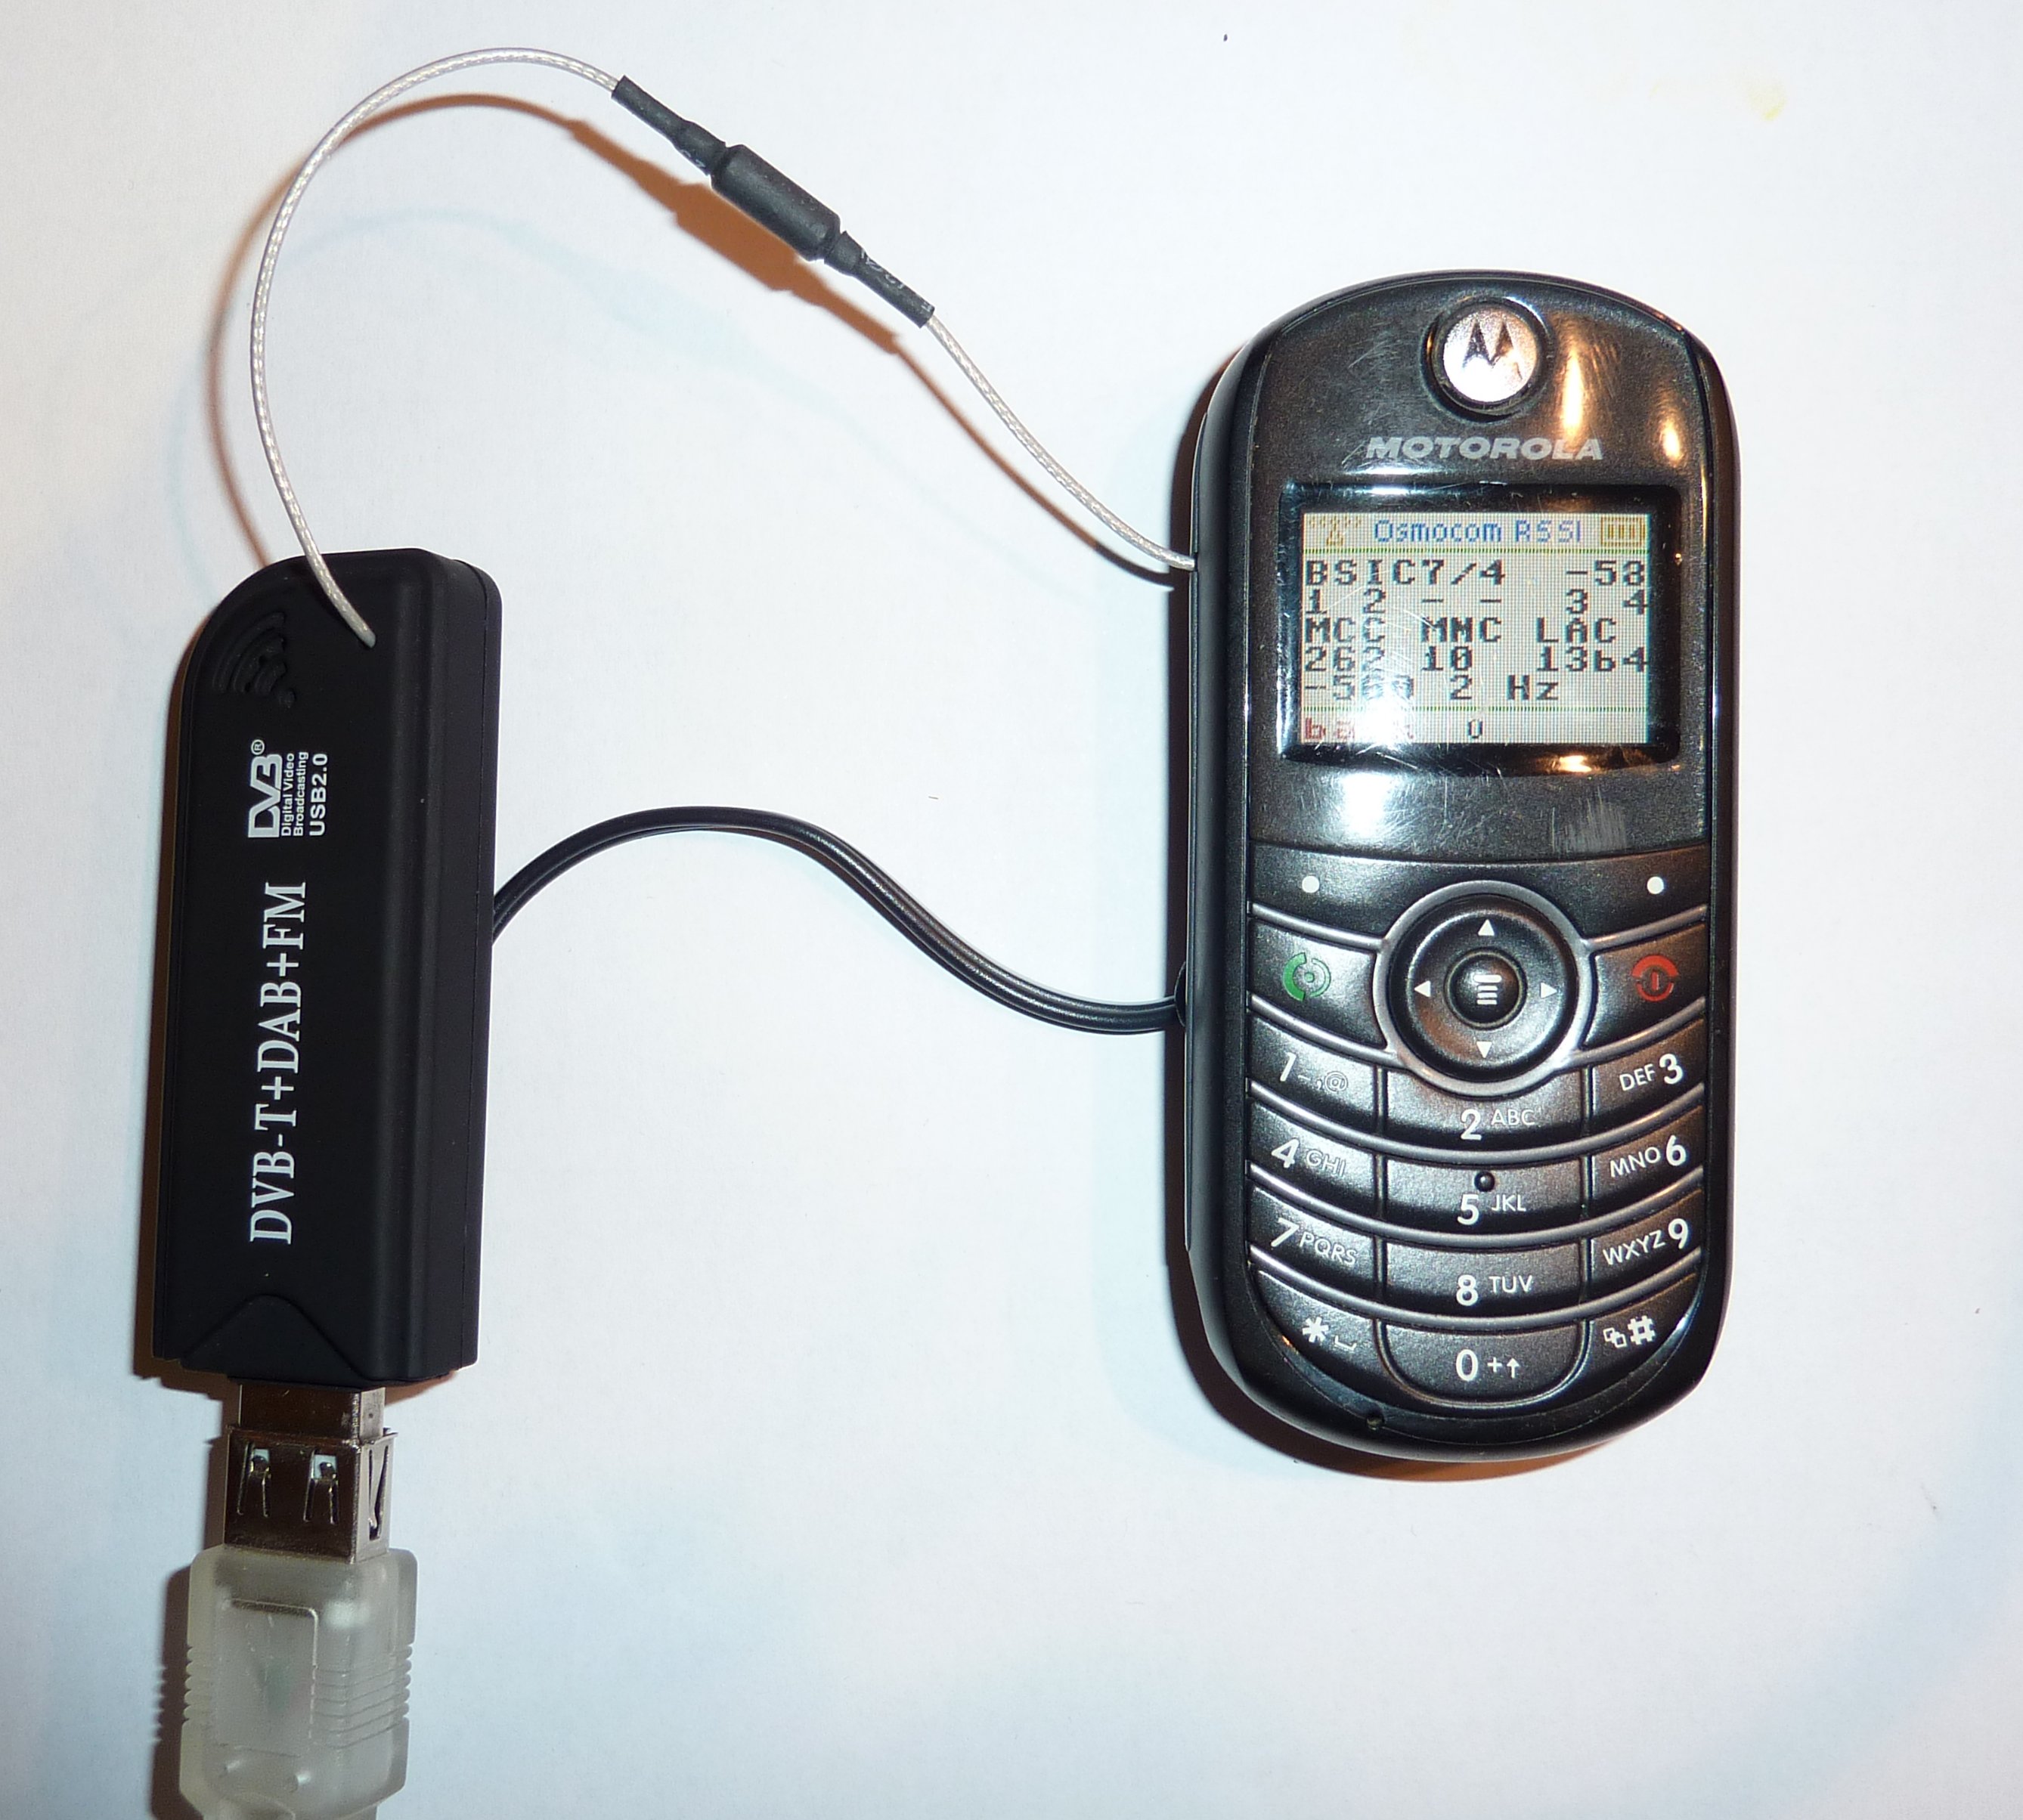 Old Motorola C139 Running Osmocom Bb Firmware While Providing 288 Mhz Clock To Usb Rtl-sdr Dongle Nice Hacks Ham Radio Hacking Computer Motorola